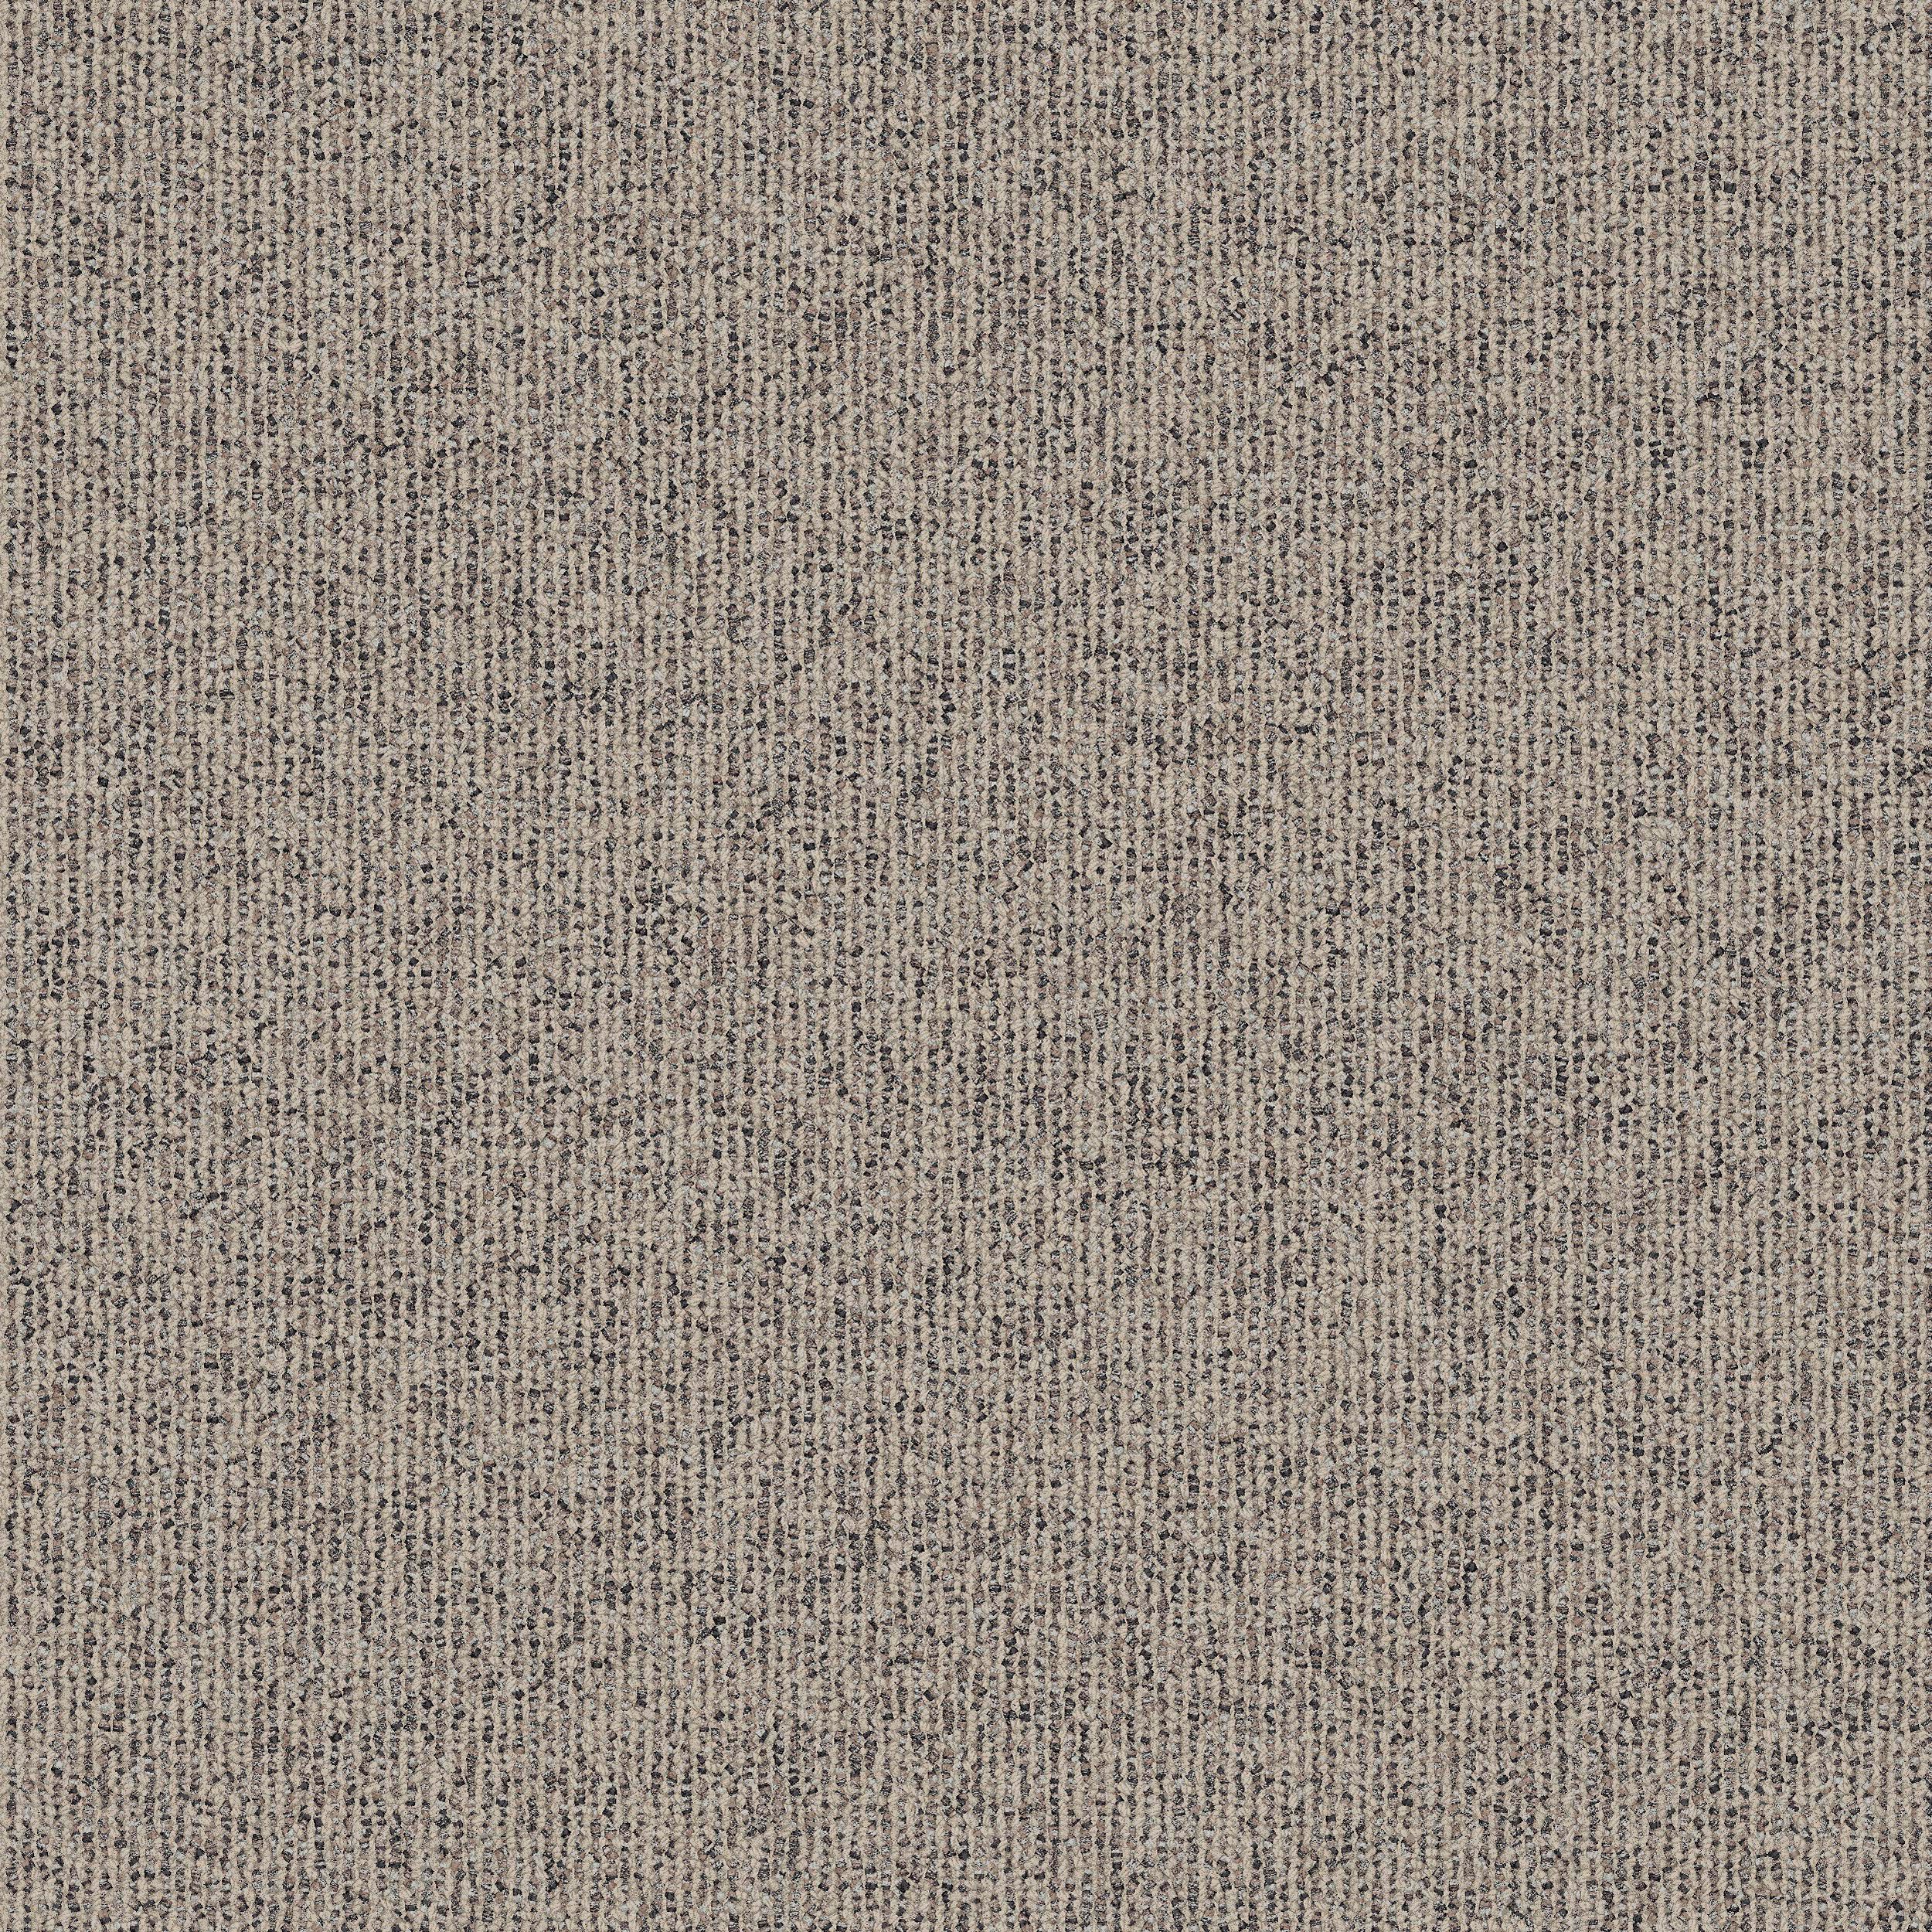 Broomed Carpet Tile In Broomed Fieldstone imagen número 2